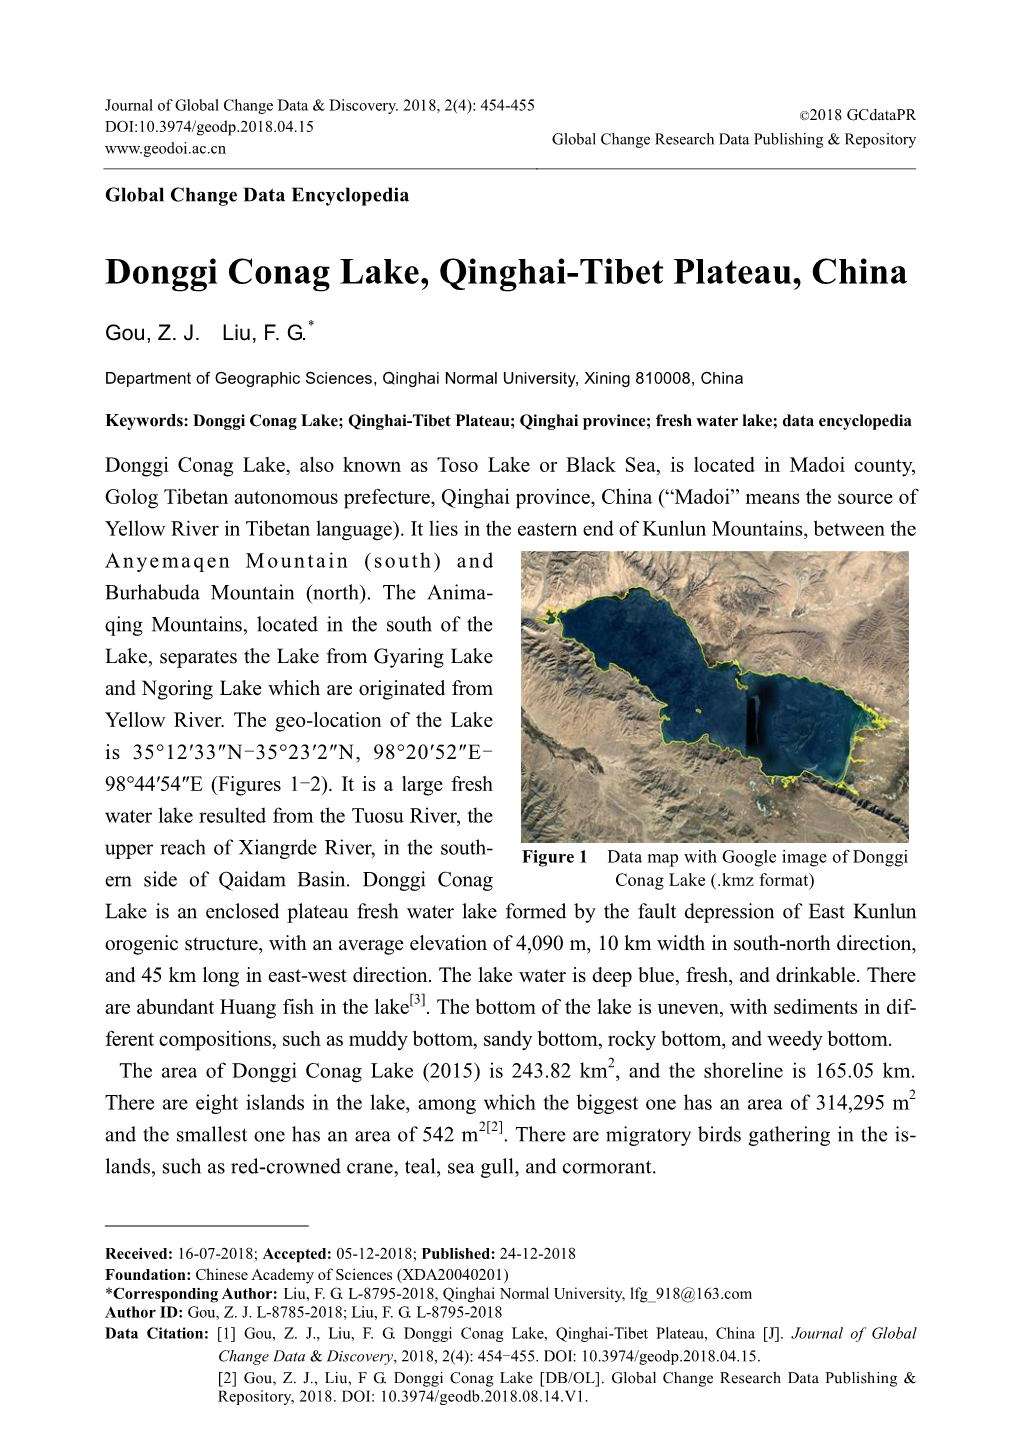 Donggi Conag Lake, Qinghai-Tibet Plateau, China